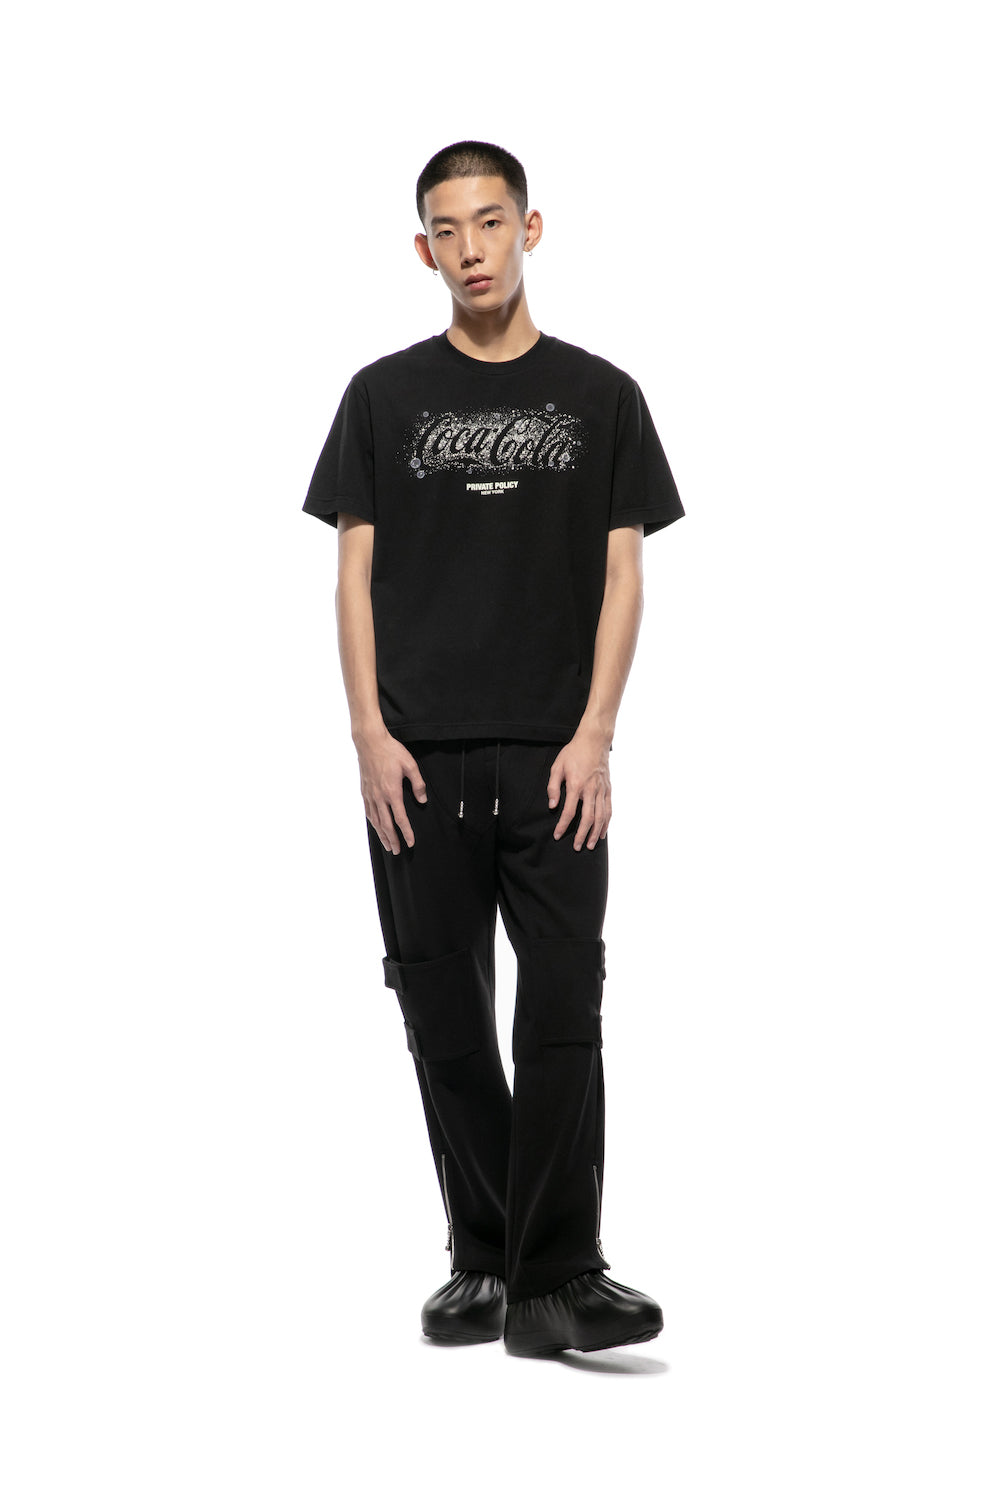 COCA-COLA Starlight T-shirt Limited Edition